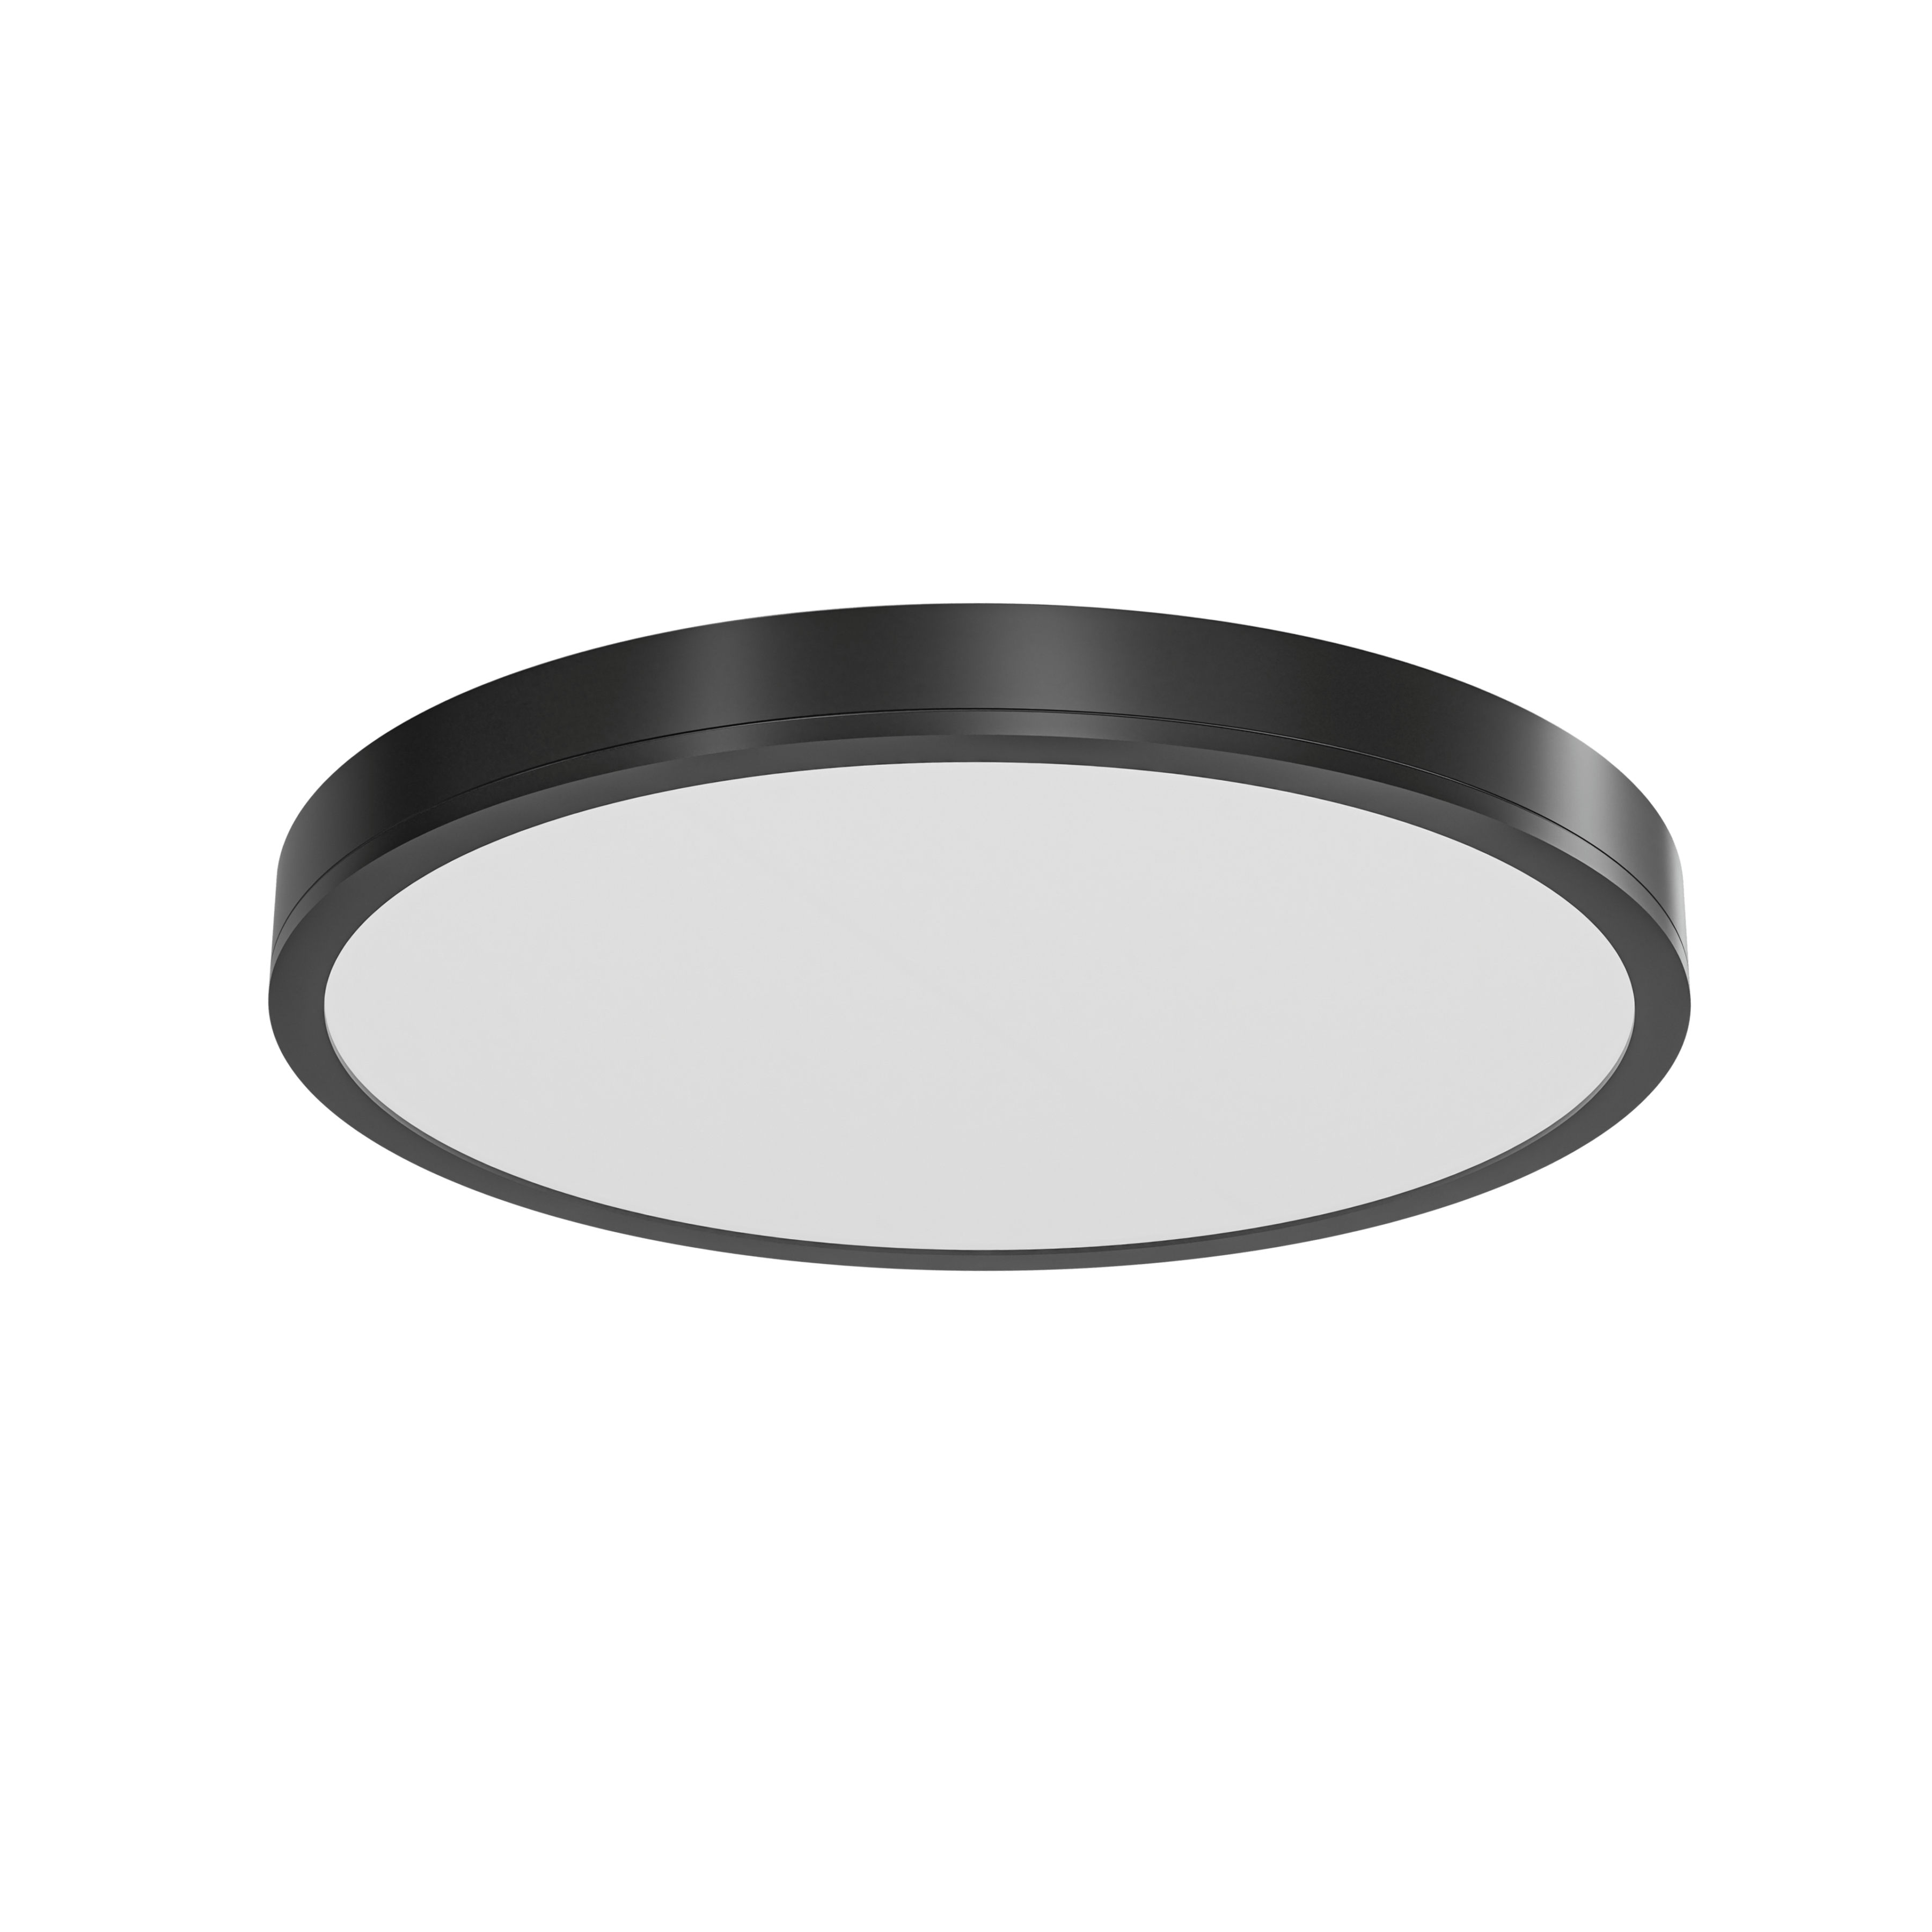 welight intelligent | EAL 303 Decken Design LED-Aufbauleuchte – Perspektive schwarz matt